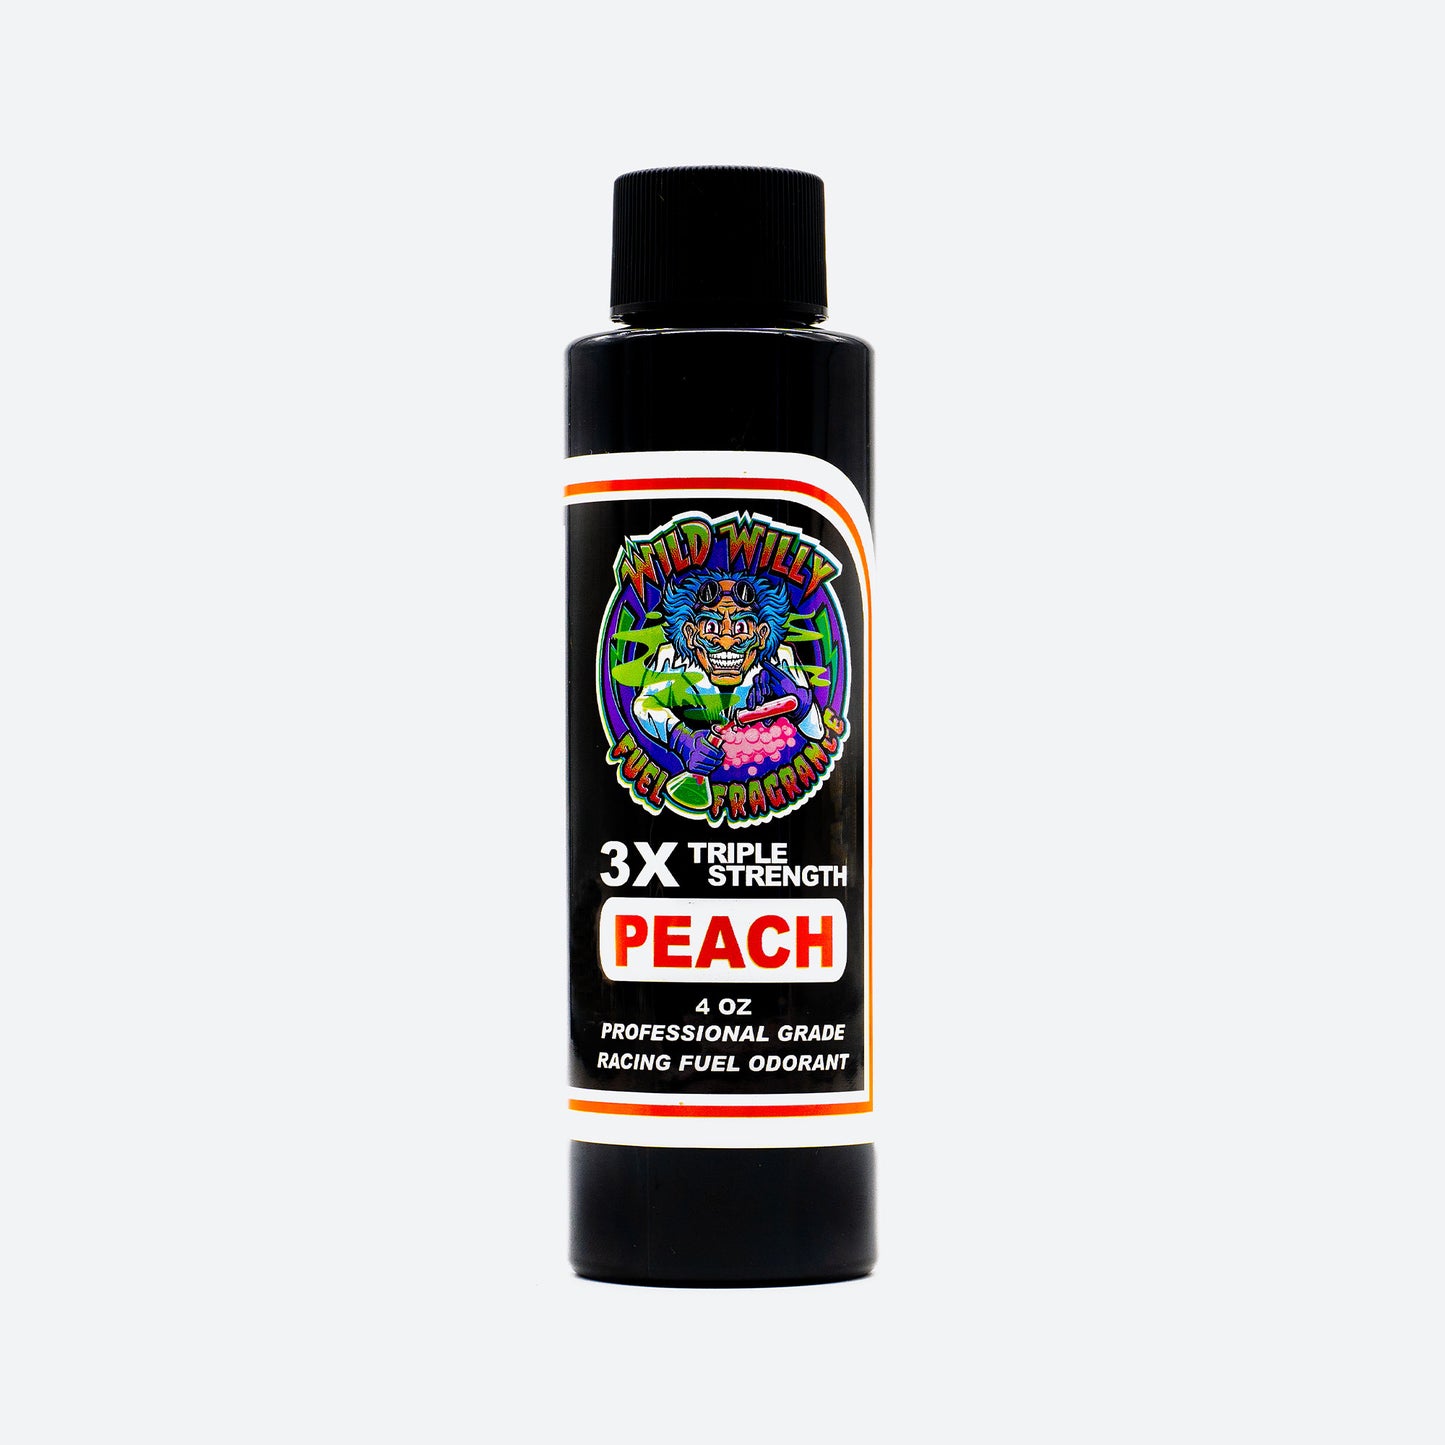 Wild Willy Fuel Fragrance - Peach